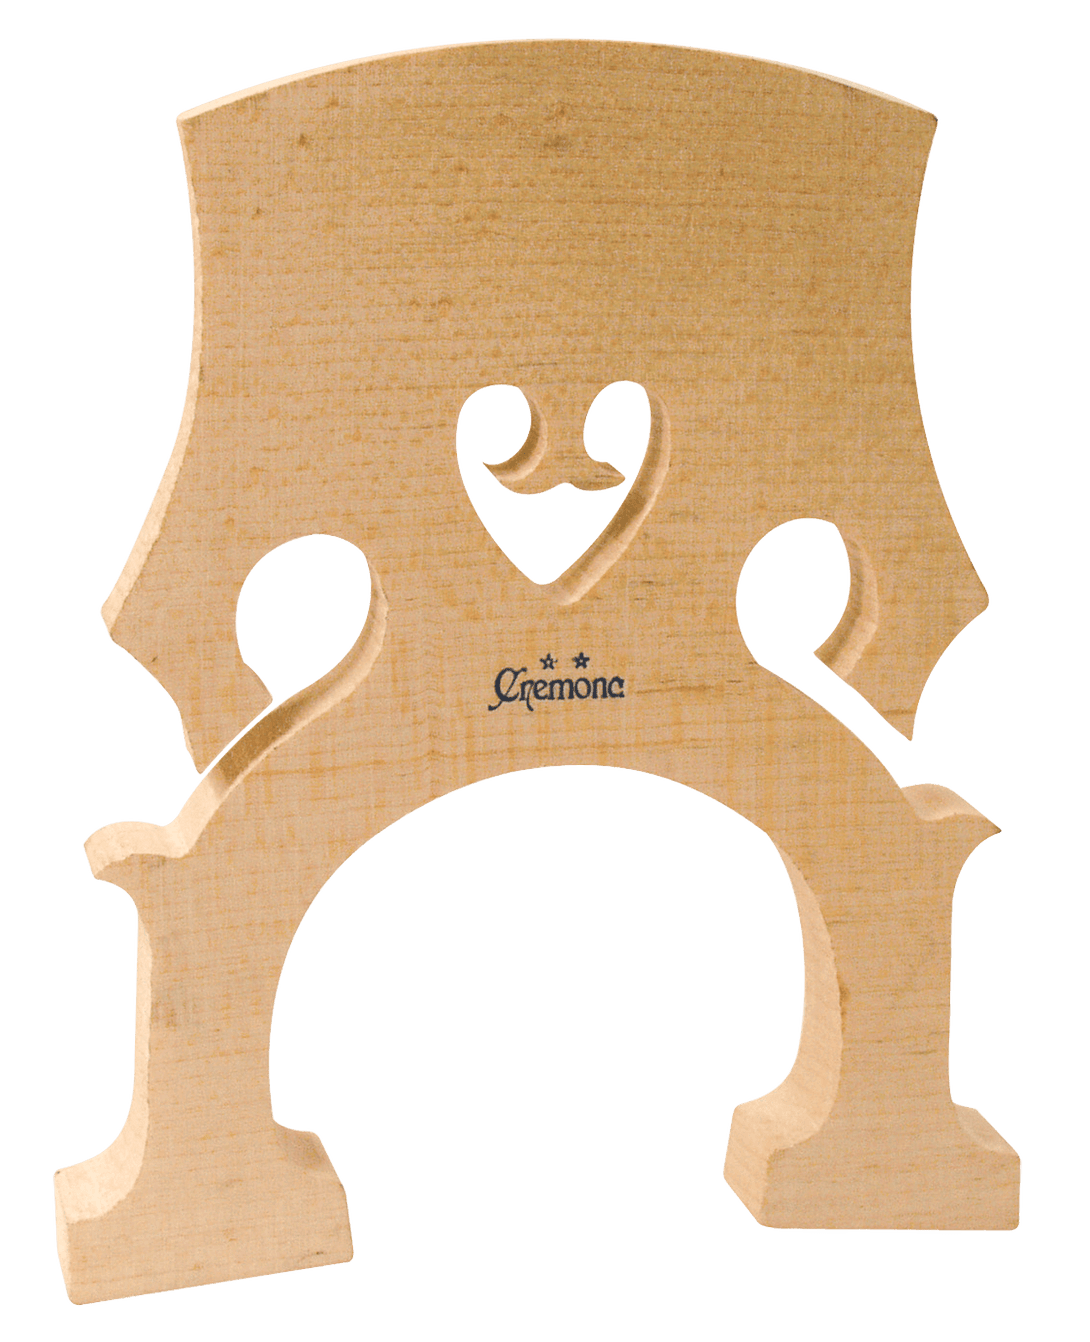 Puente Cremona Cello Vp-202C 4/4 - The Music Site